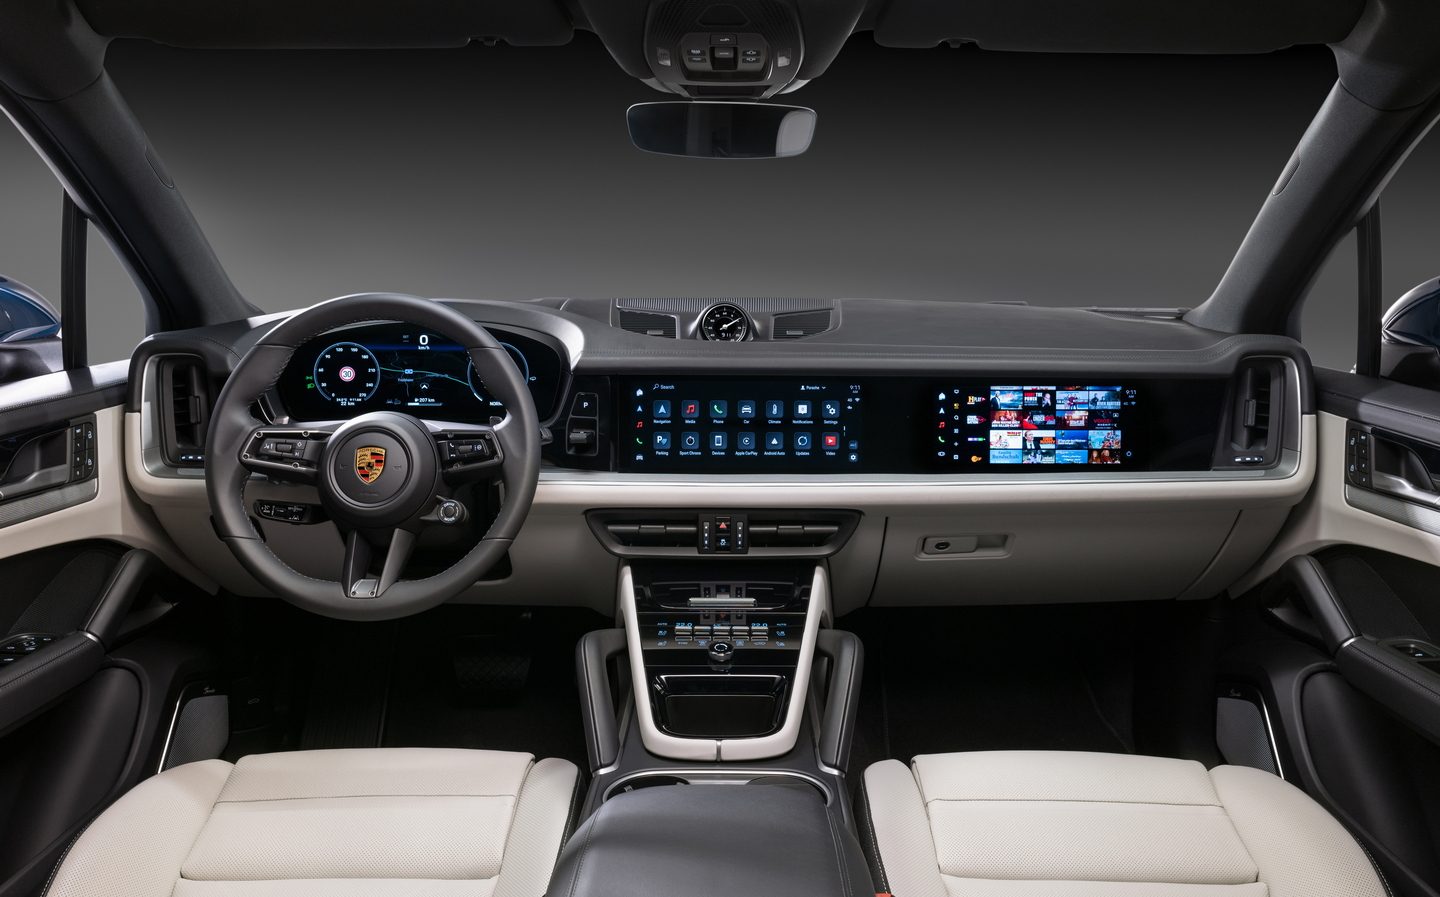 Car Interior Parts & Accessories, Dash, Seat & Steering Wheel Covers